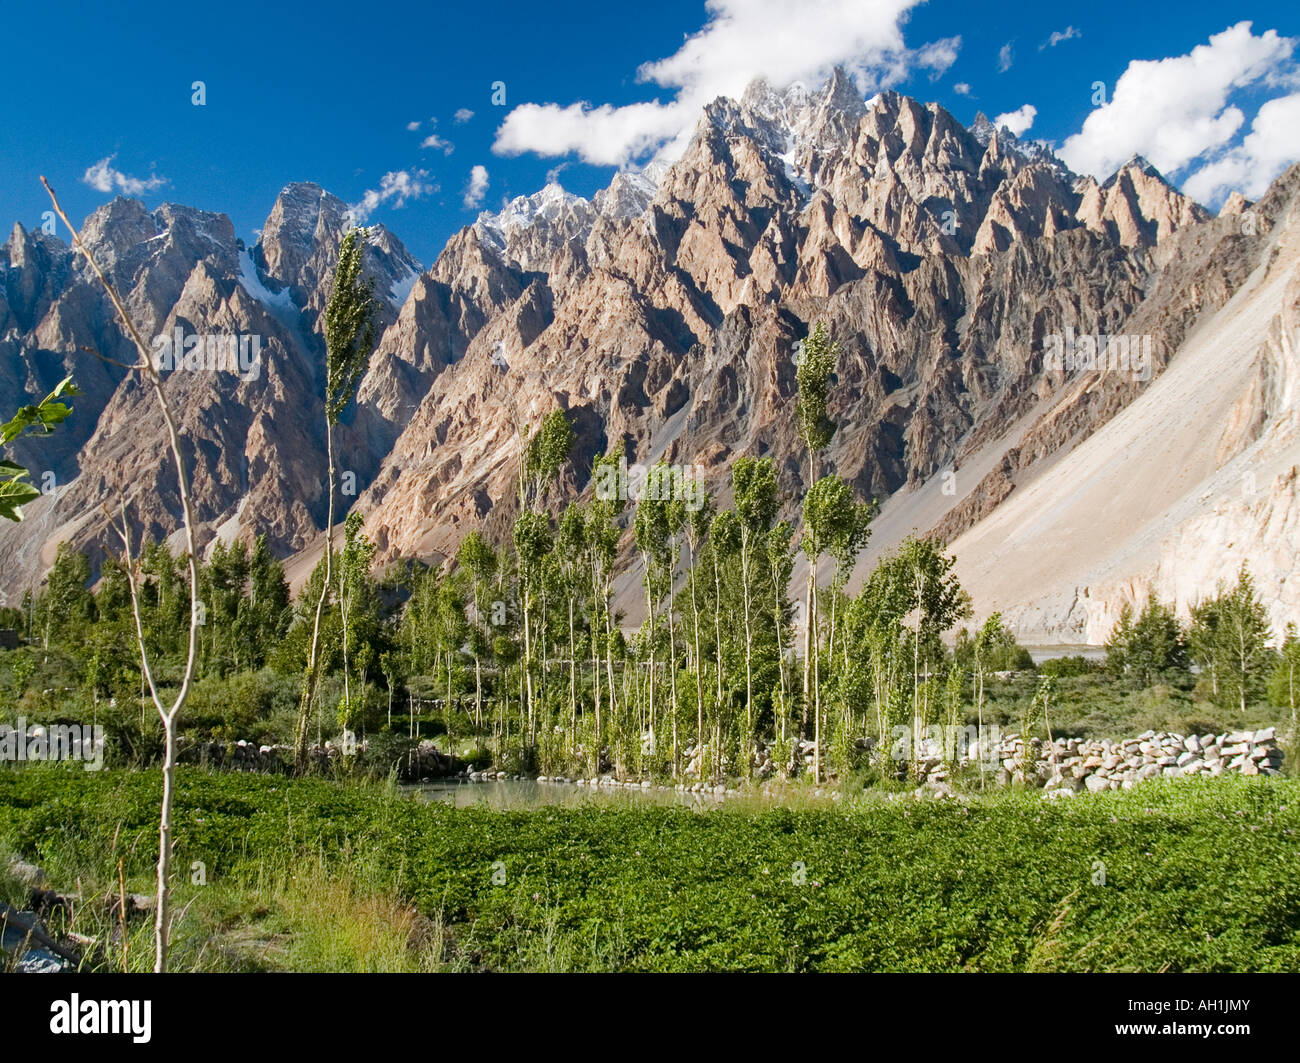 the beautiful landscape of Passu village in the Karakoram mountains of Pakistan Stock Photo